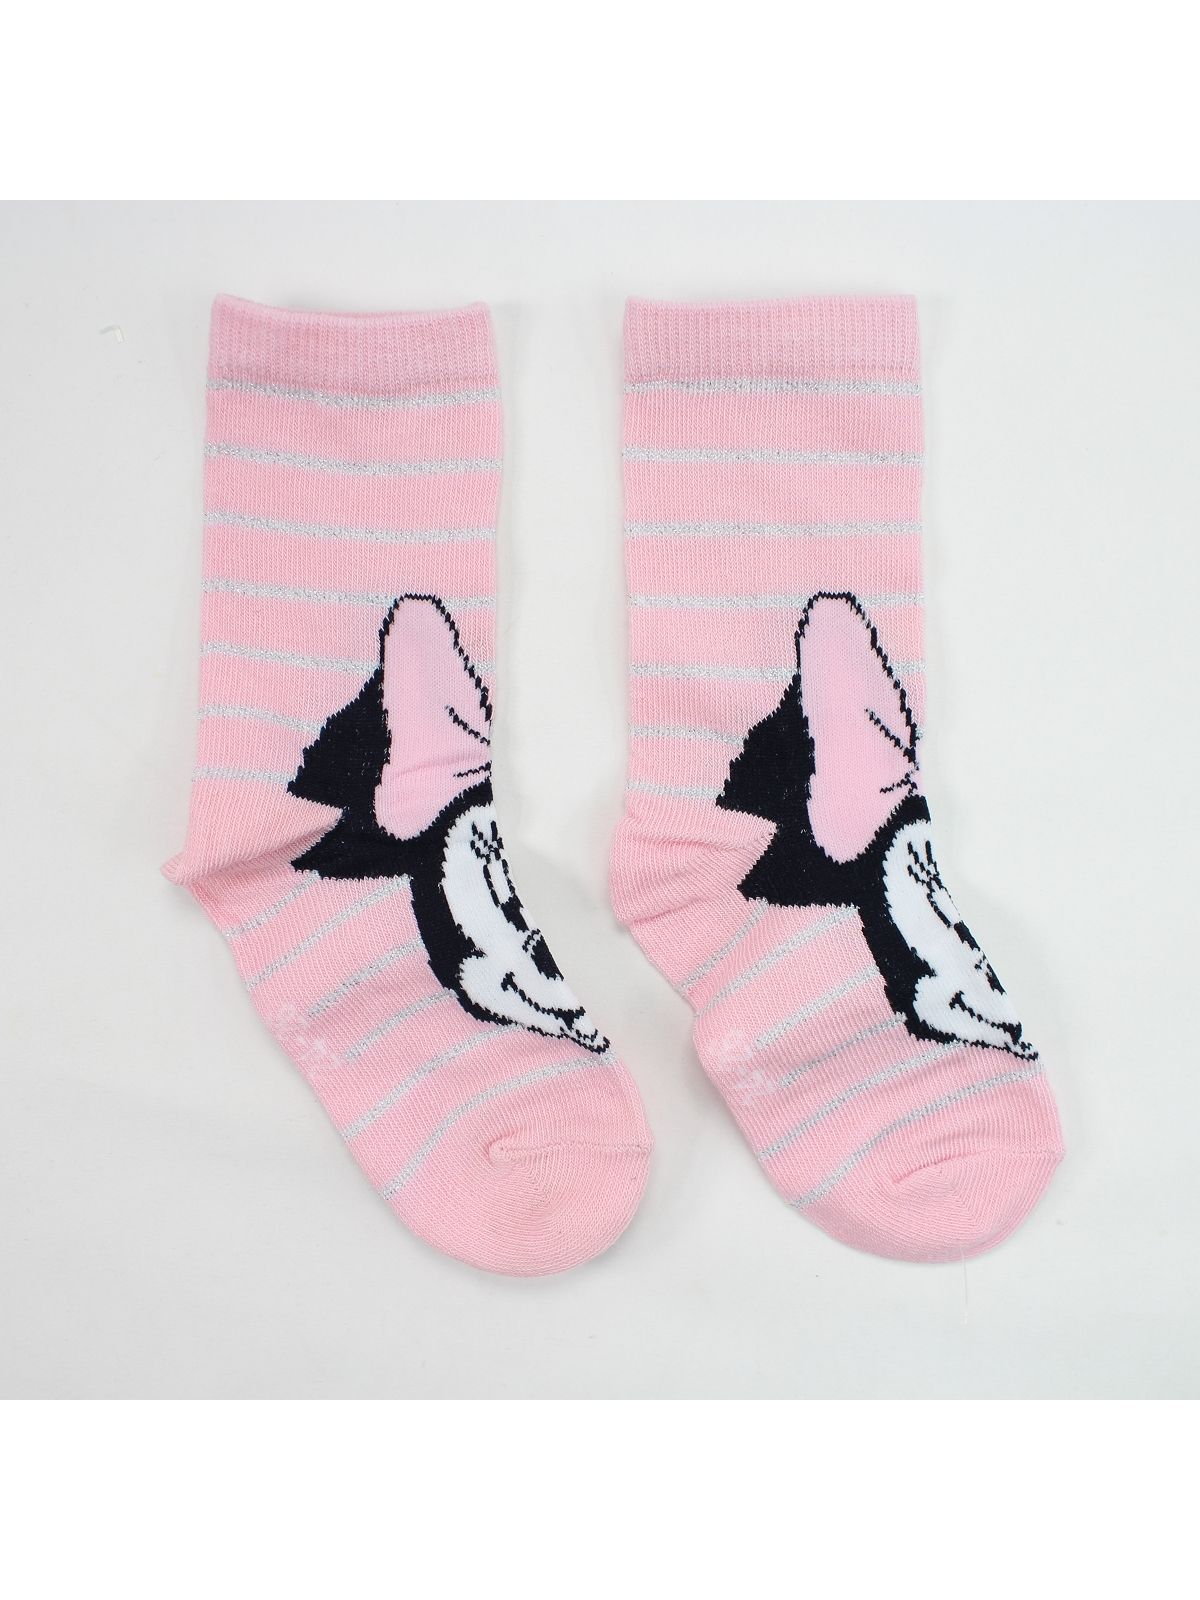 Minnie Pack of 10 pairs of socks